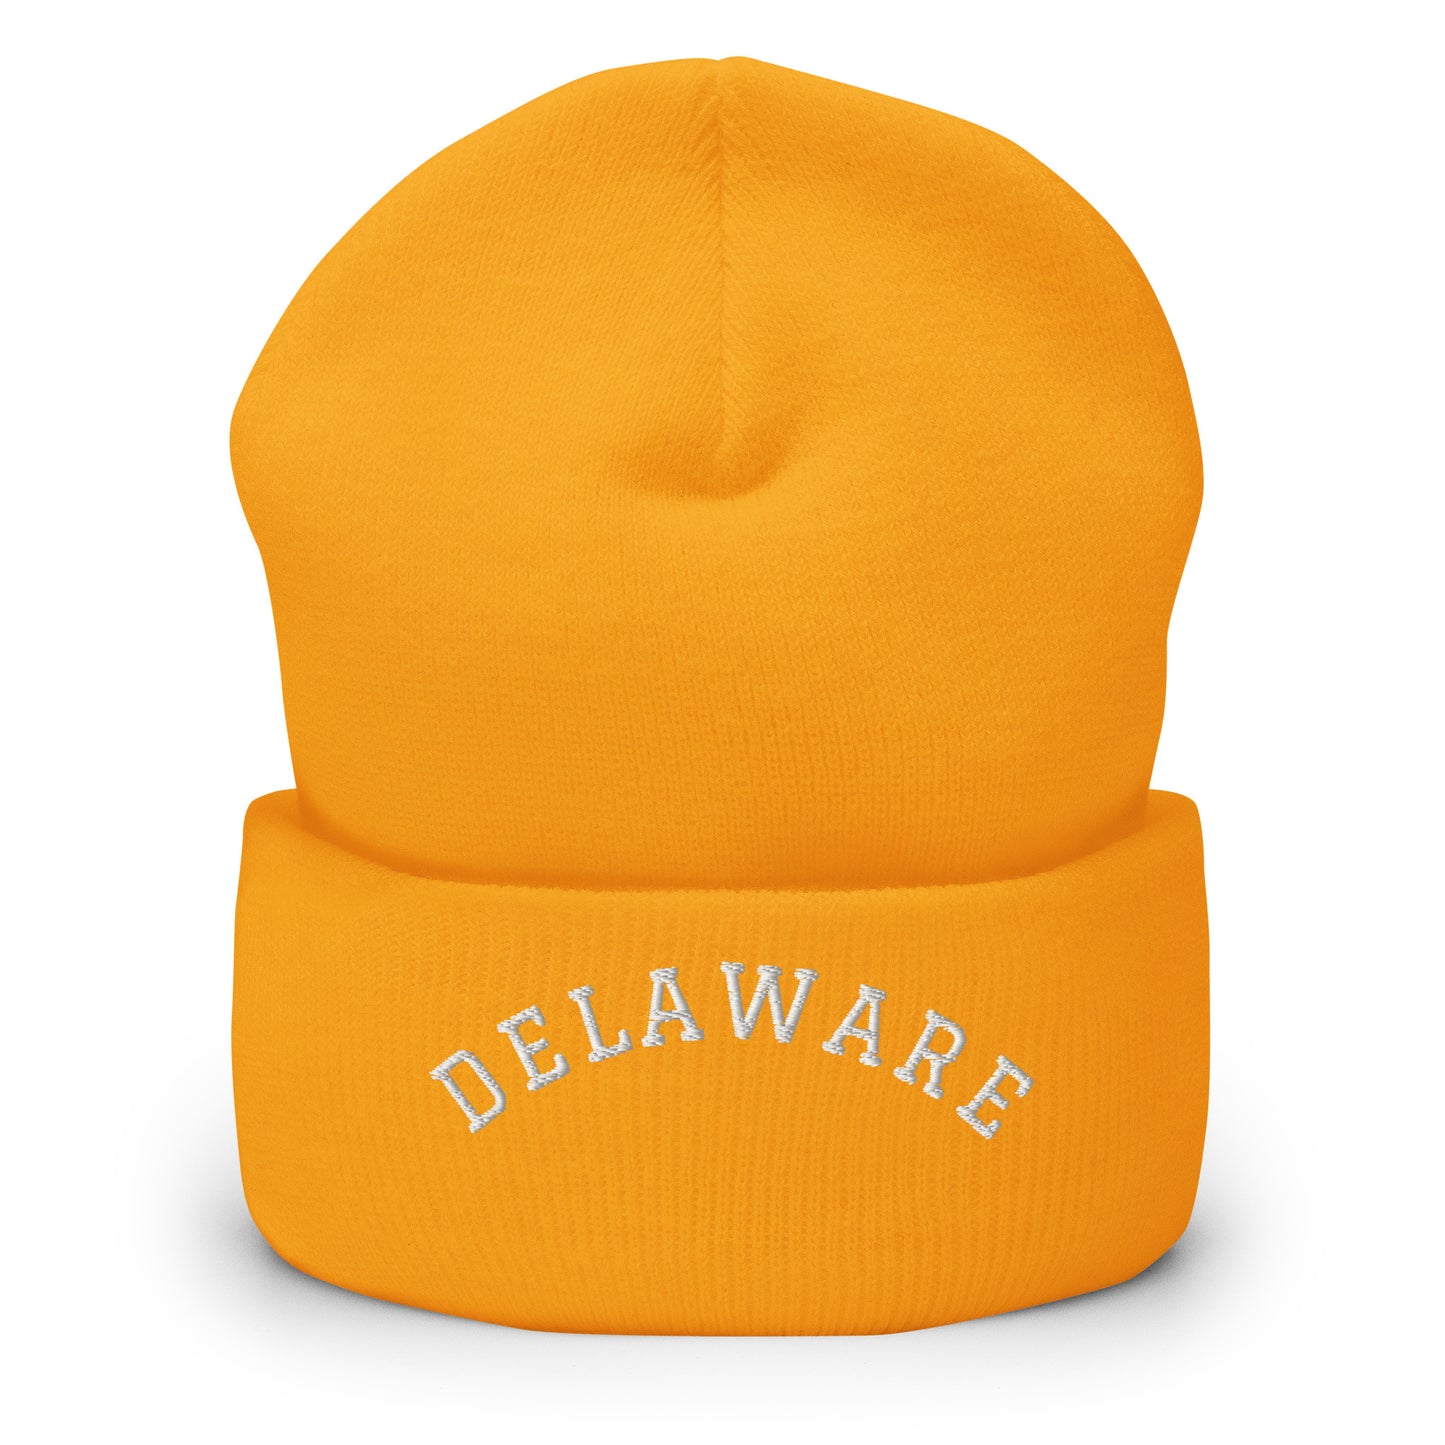 Delaware Arch Cuffed Beanie Hat